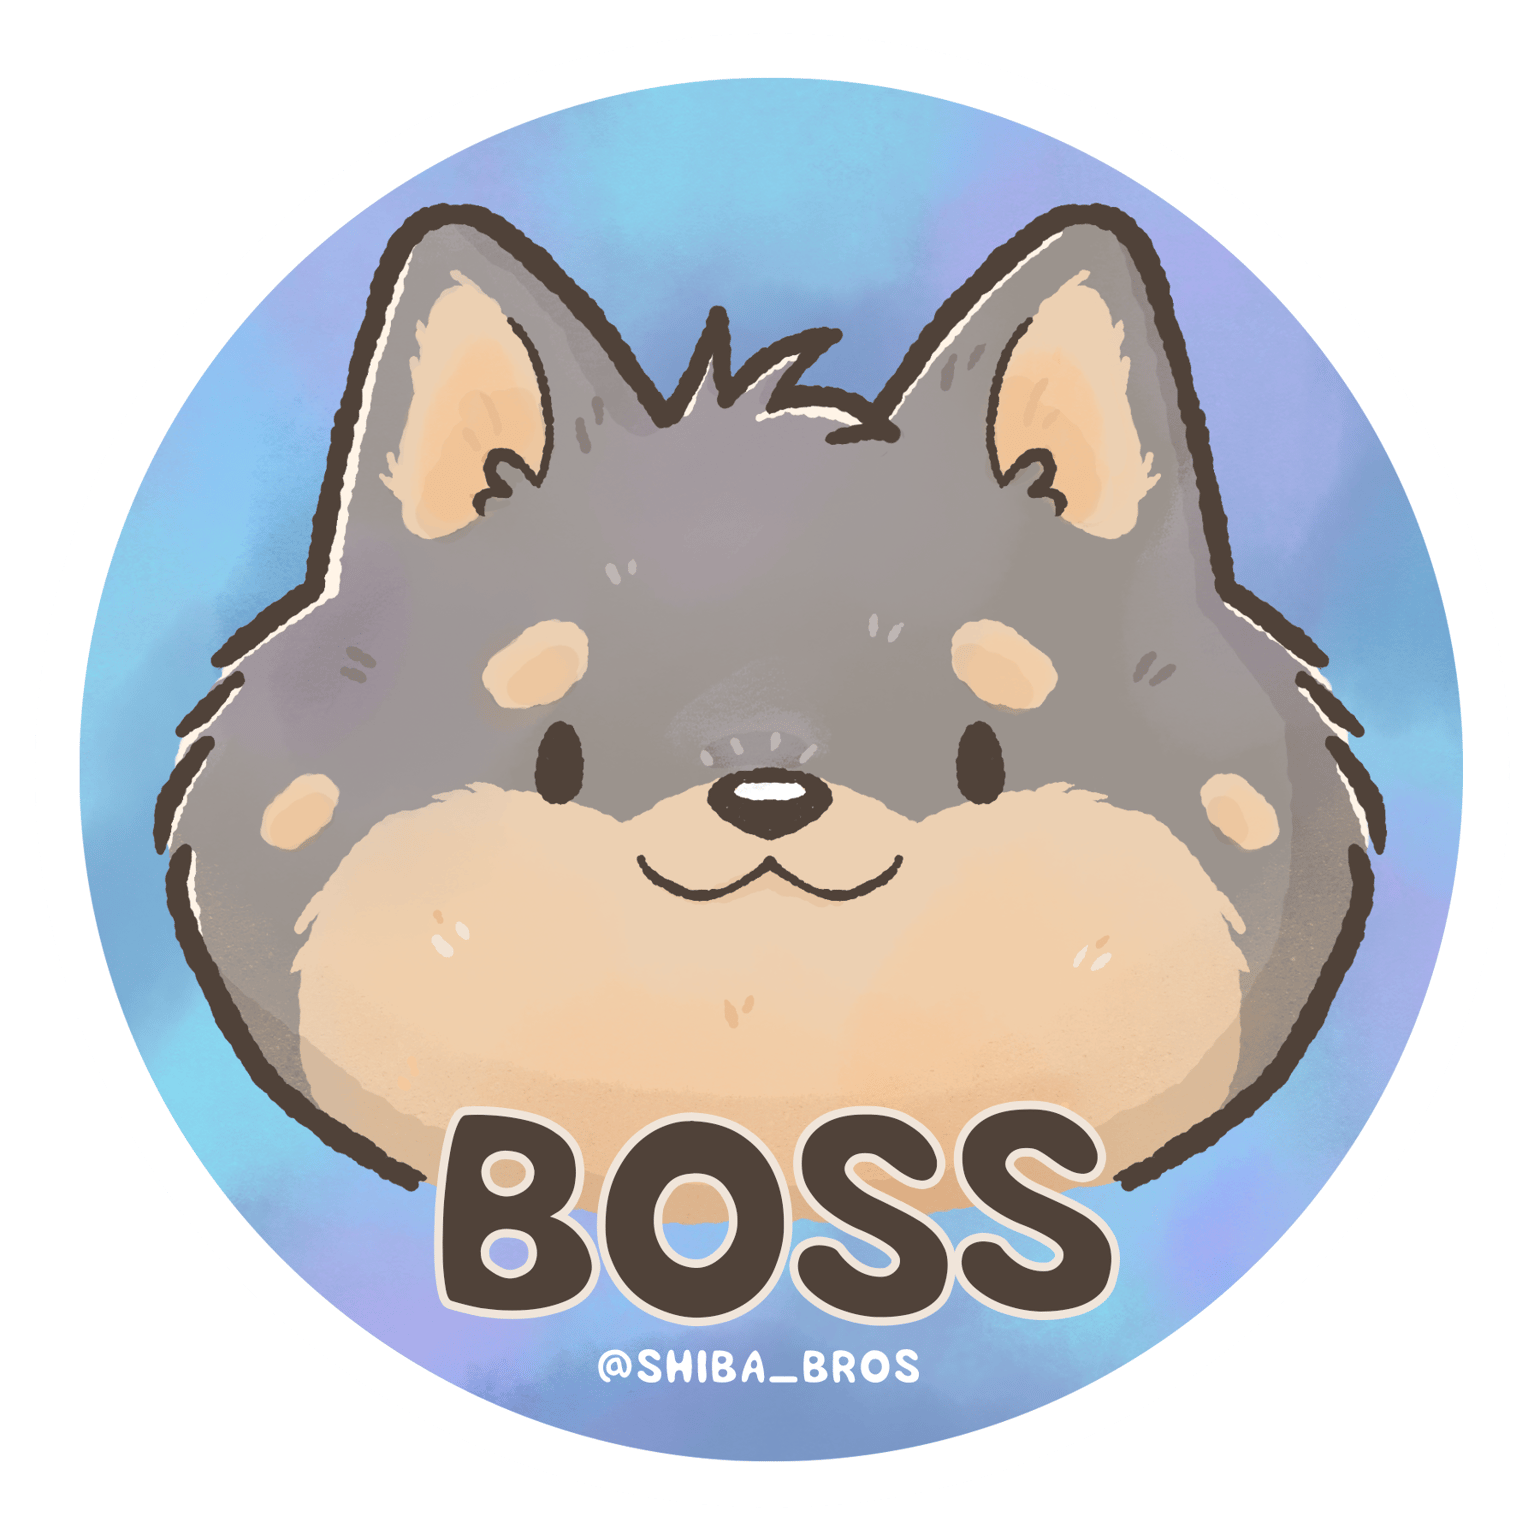 Image of Boss 